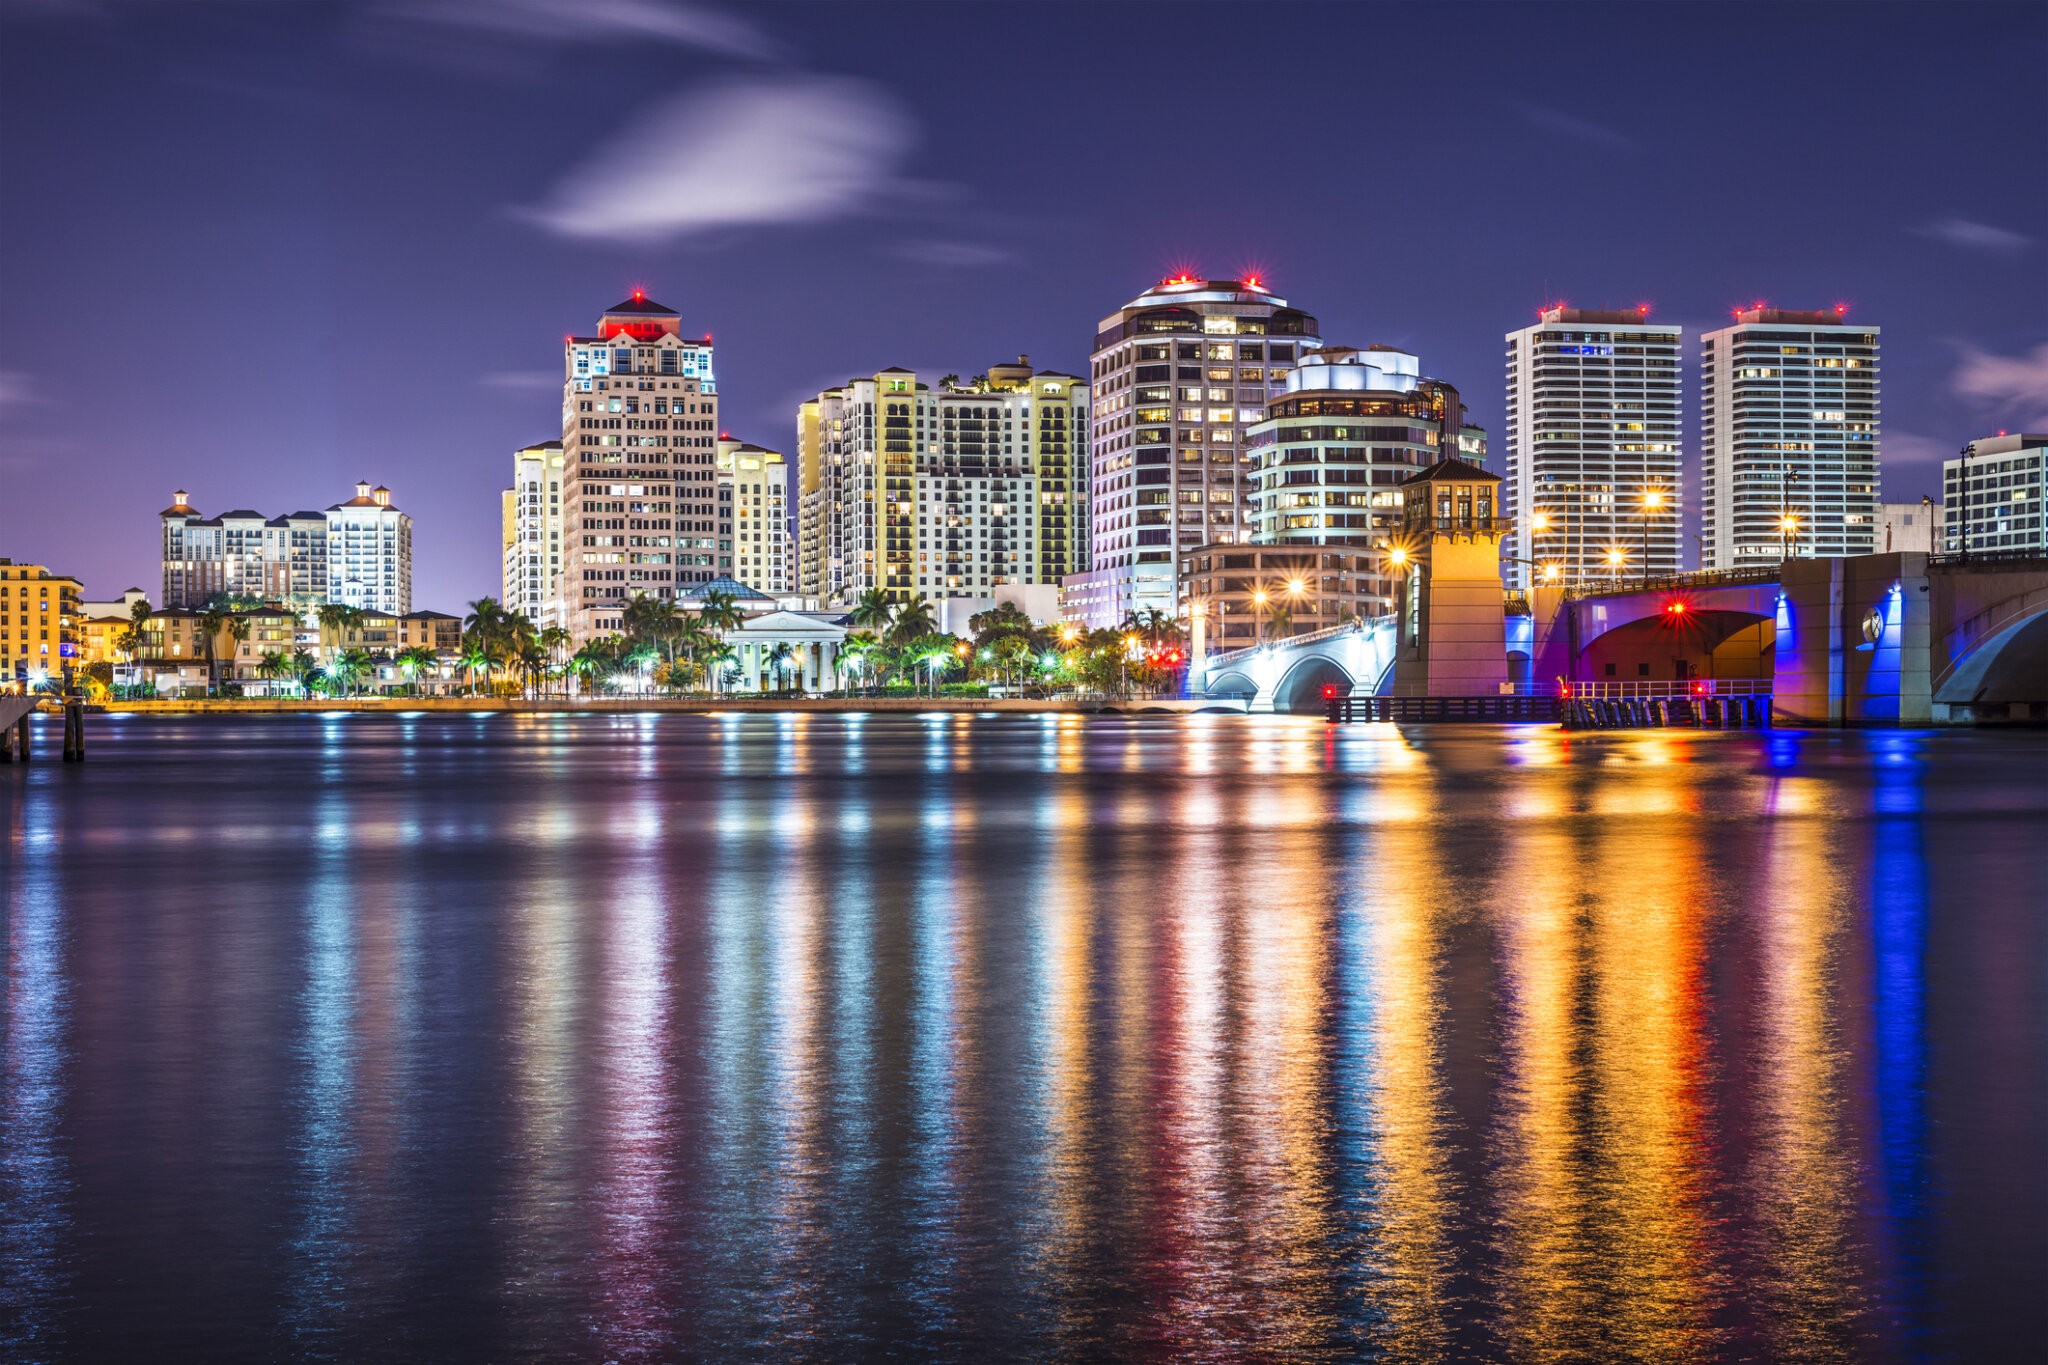 The downtown West Palm Beach nighttime skyline